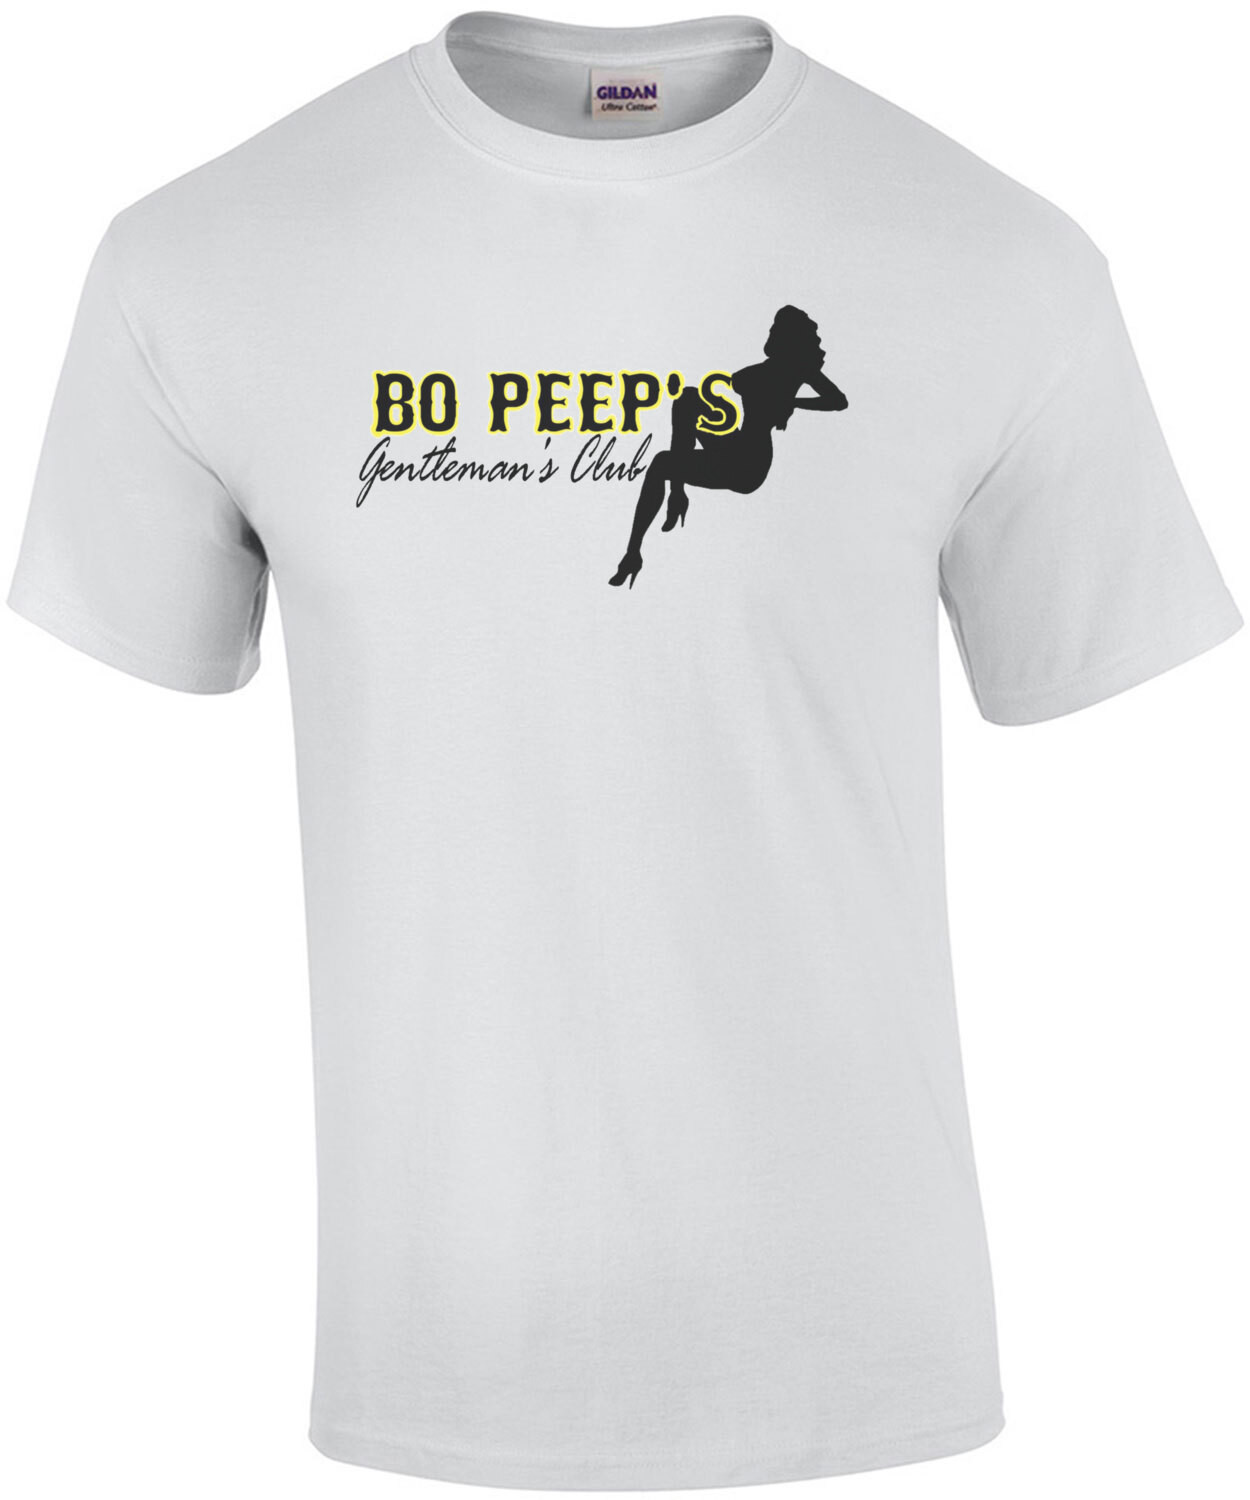 Bo Peep's Gentleman's Club - funny t-shirt